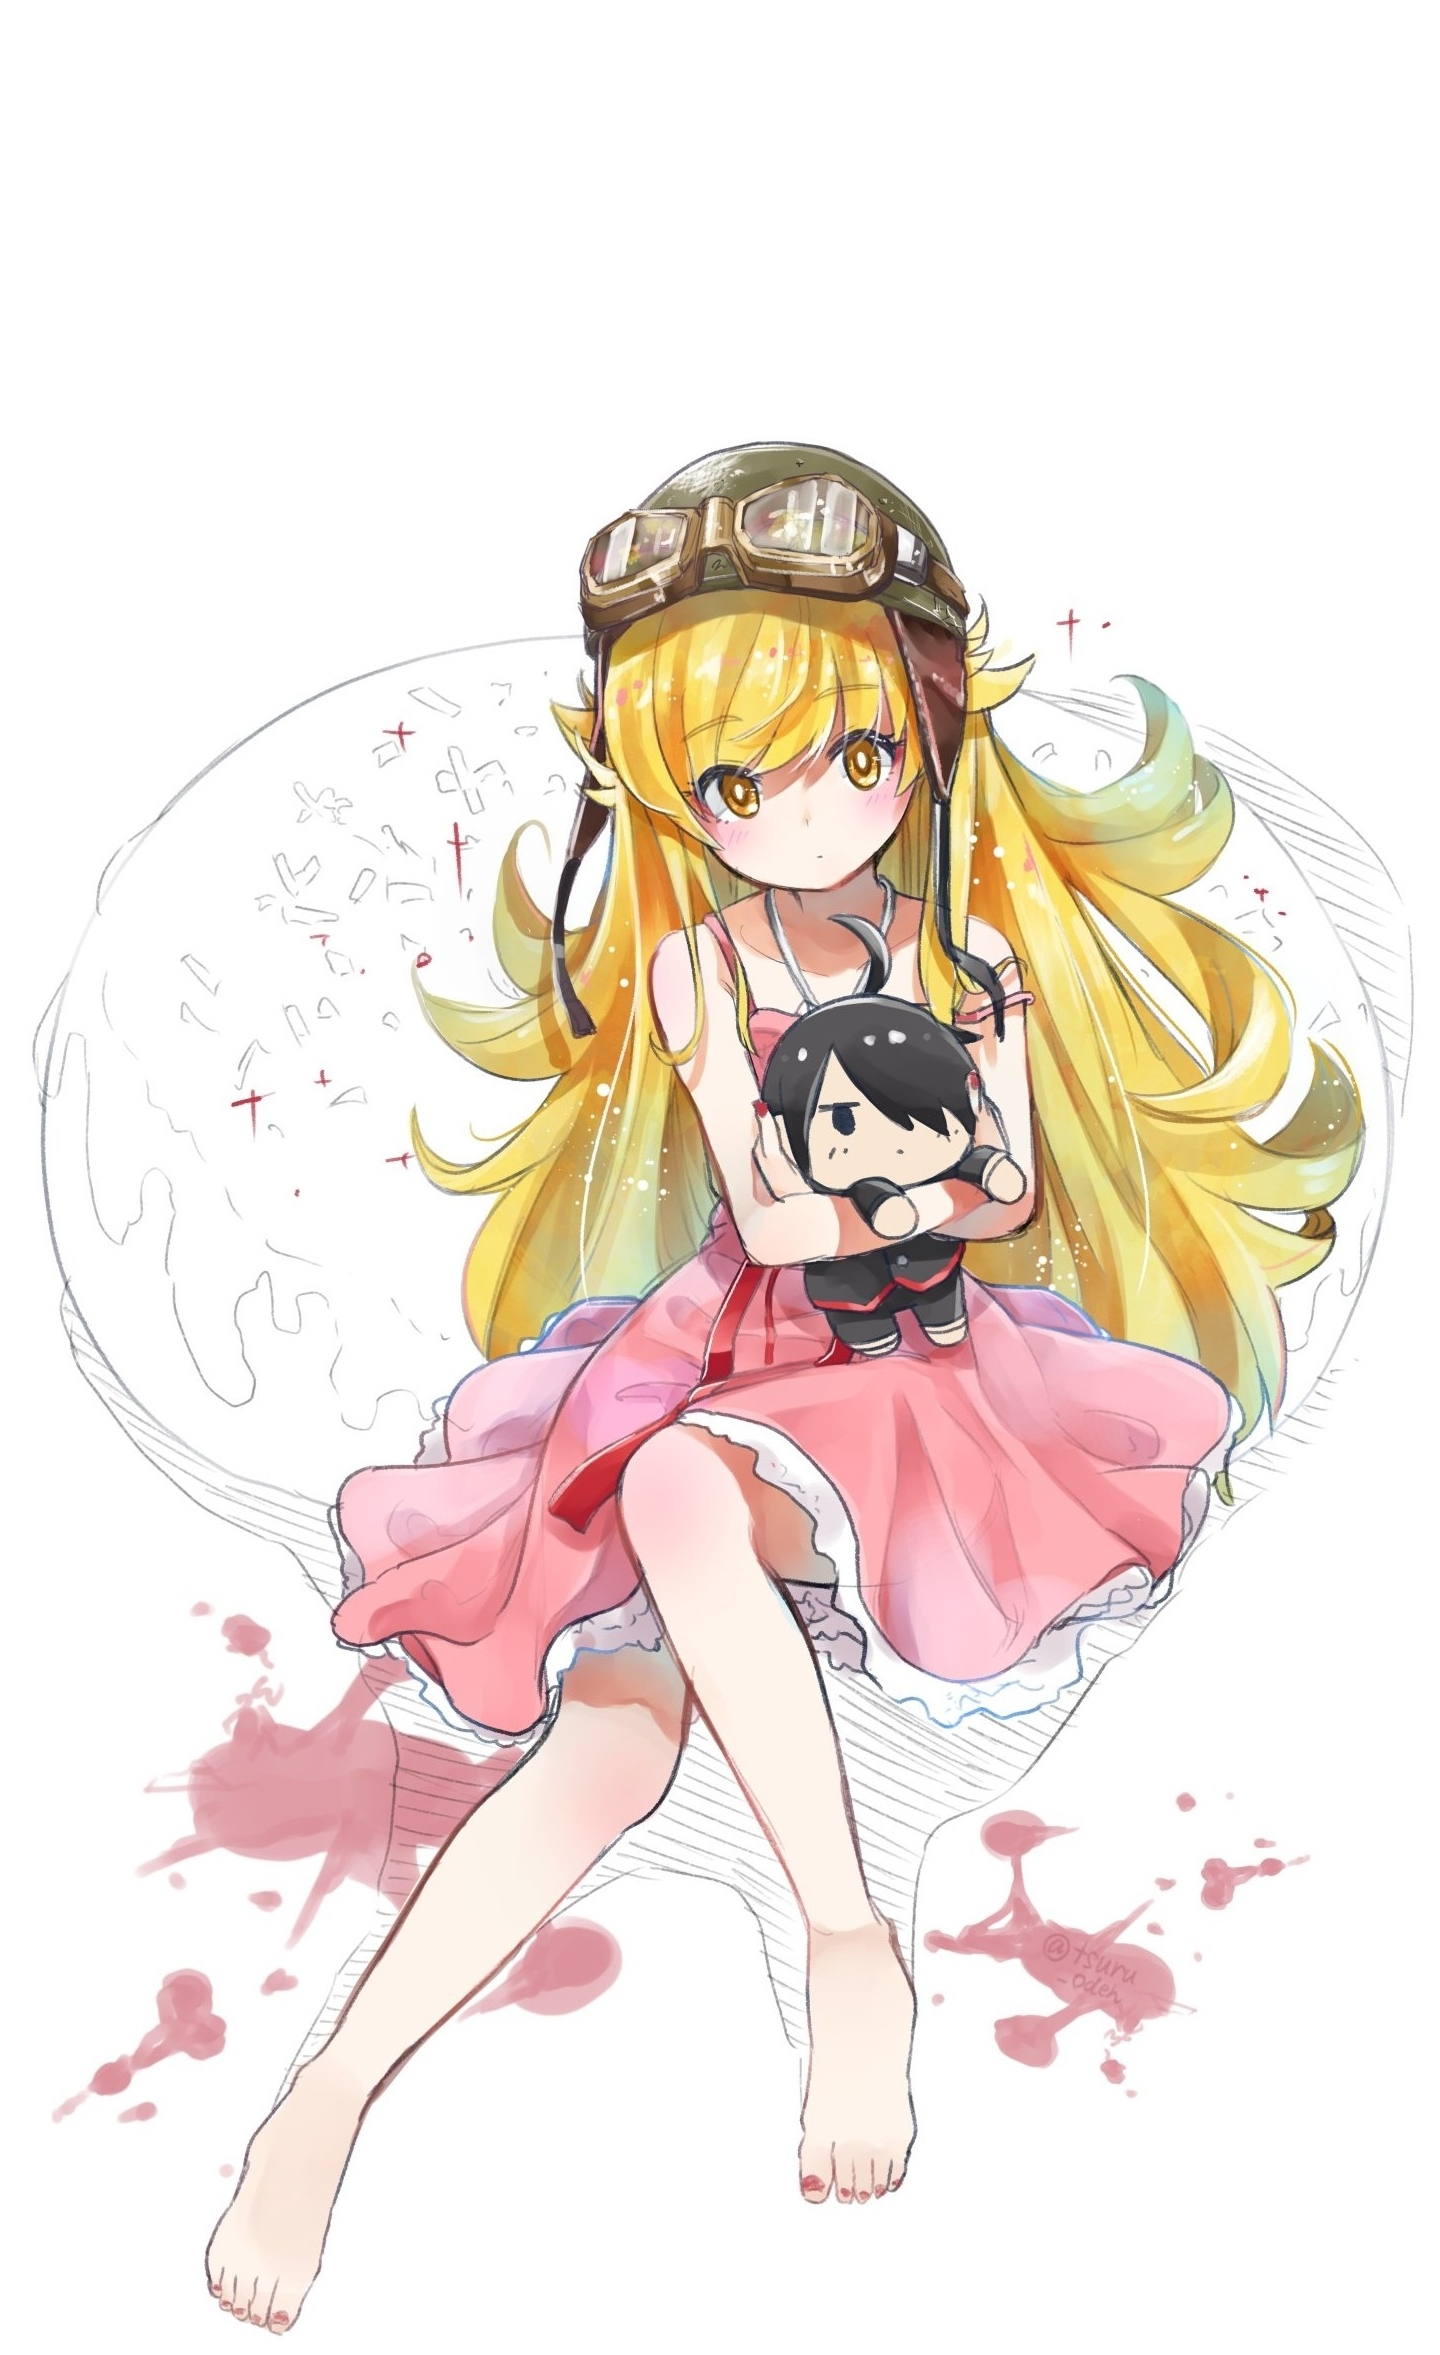 Download 1440x2630 Wallpaper Cute Anime Girl Artwork